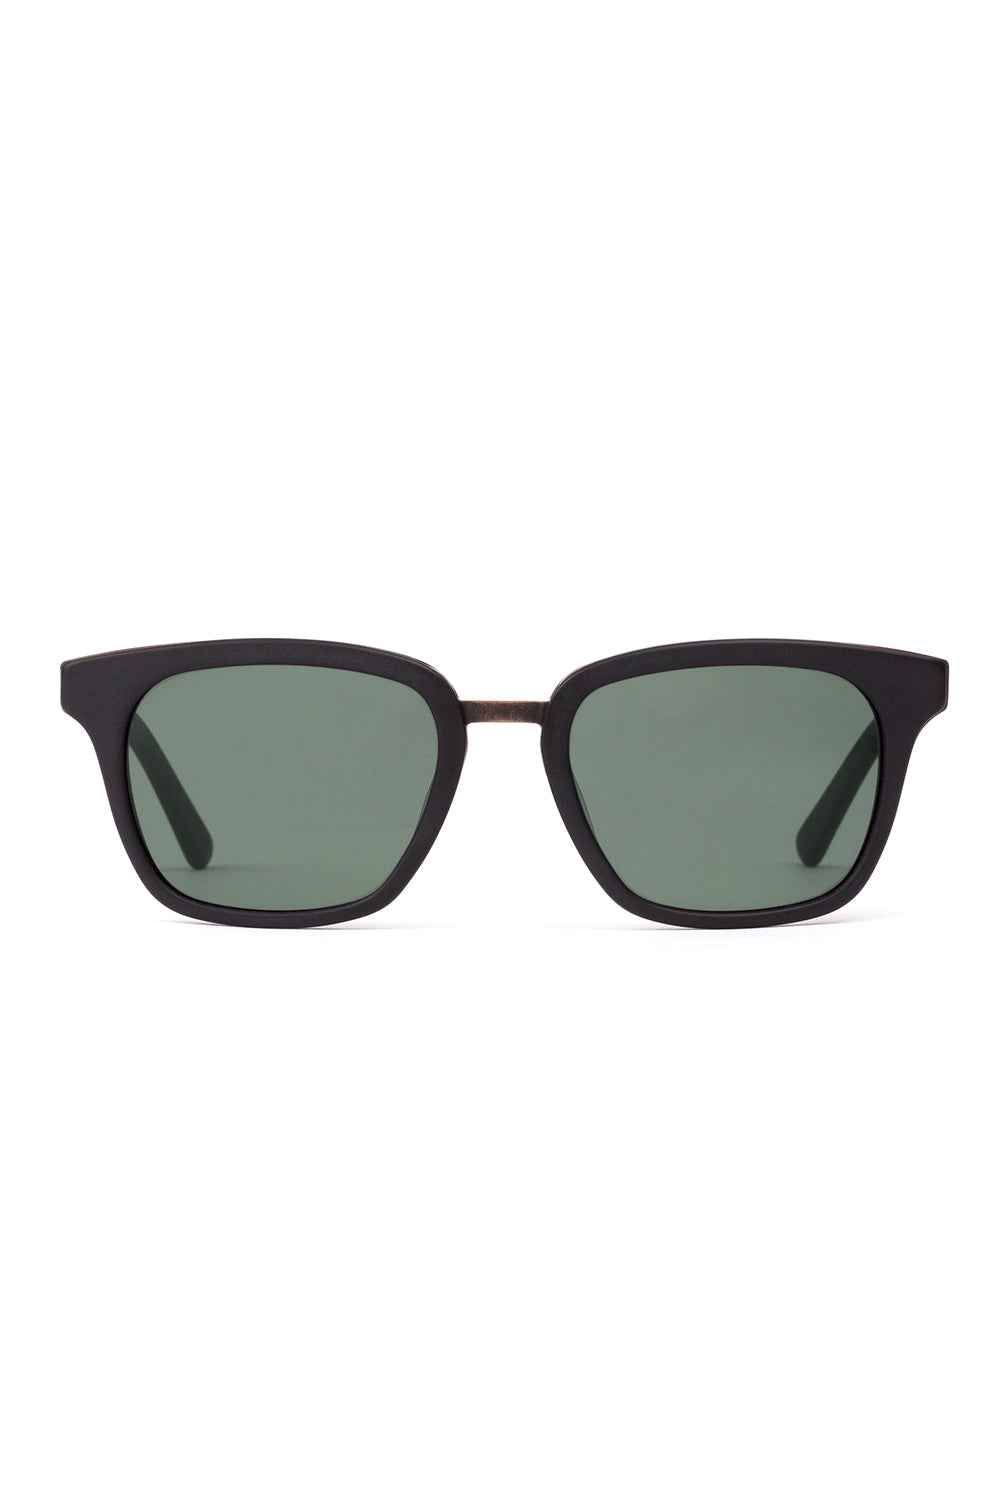 Shop OTIS Sunglasses  OTIS Fiction Sunglasses – Sanbah Australia